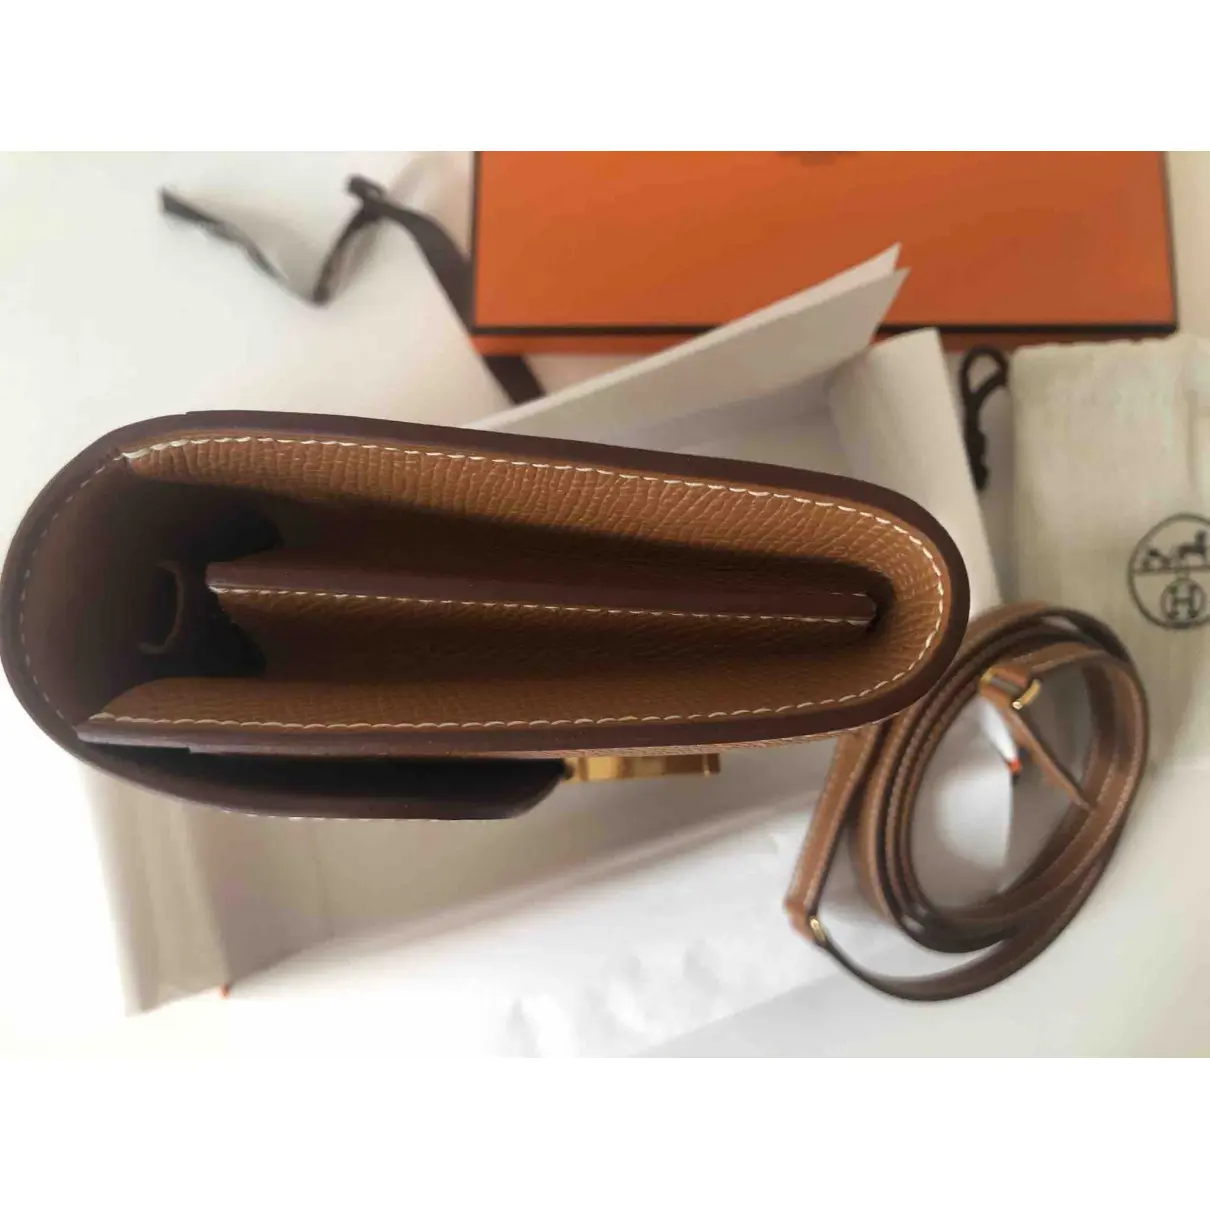 Constance leather handbag Hermès